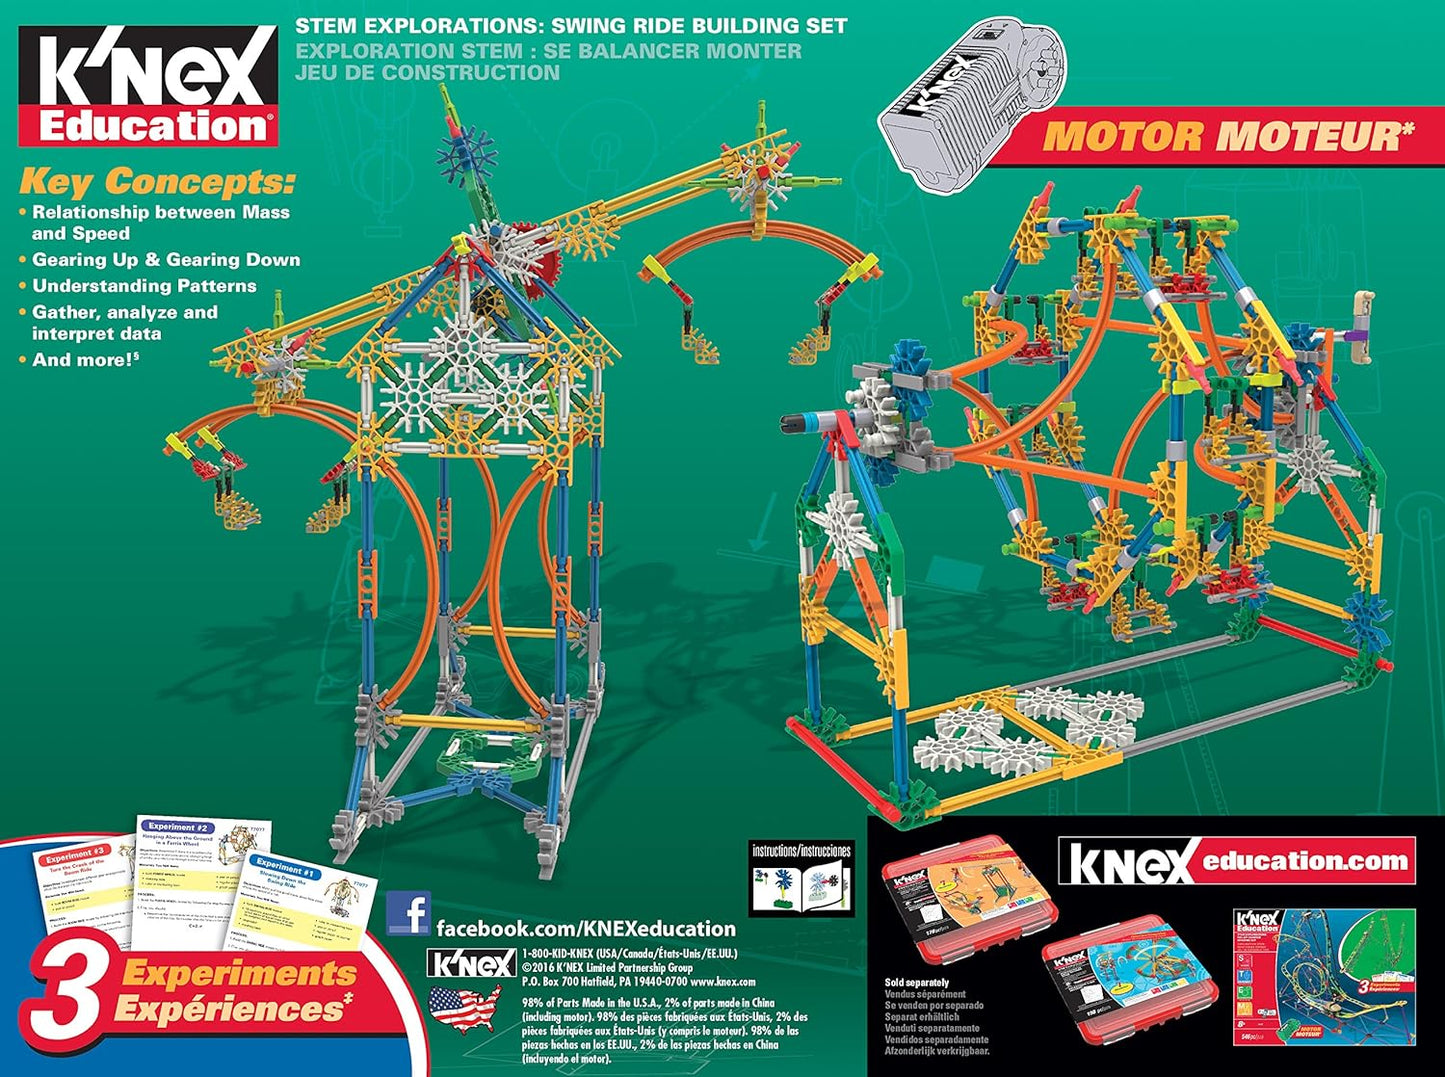 K’NEX STEM Explorations Swing Ride Building Set 77077